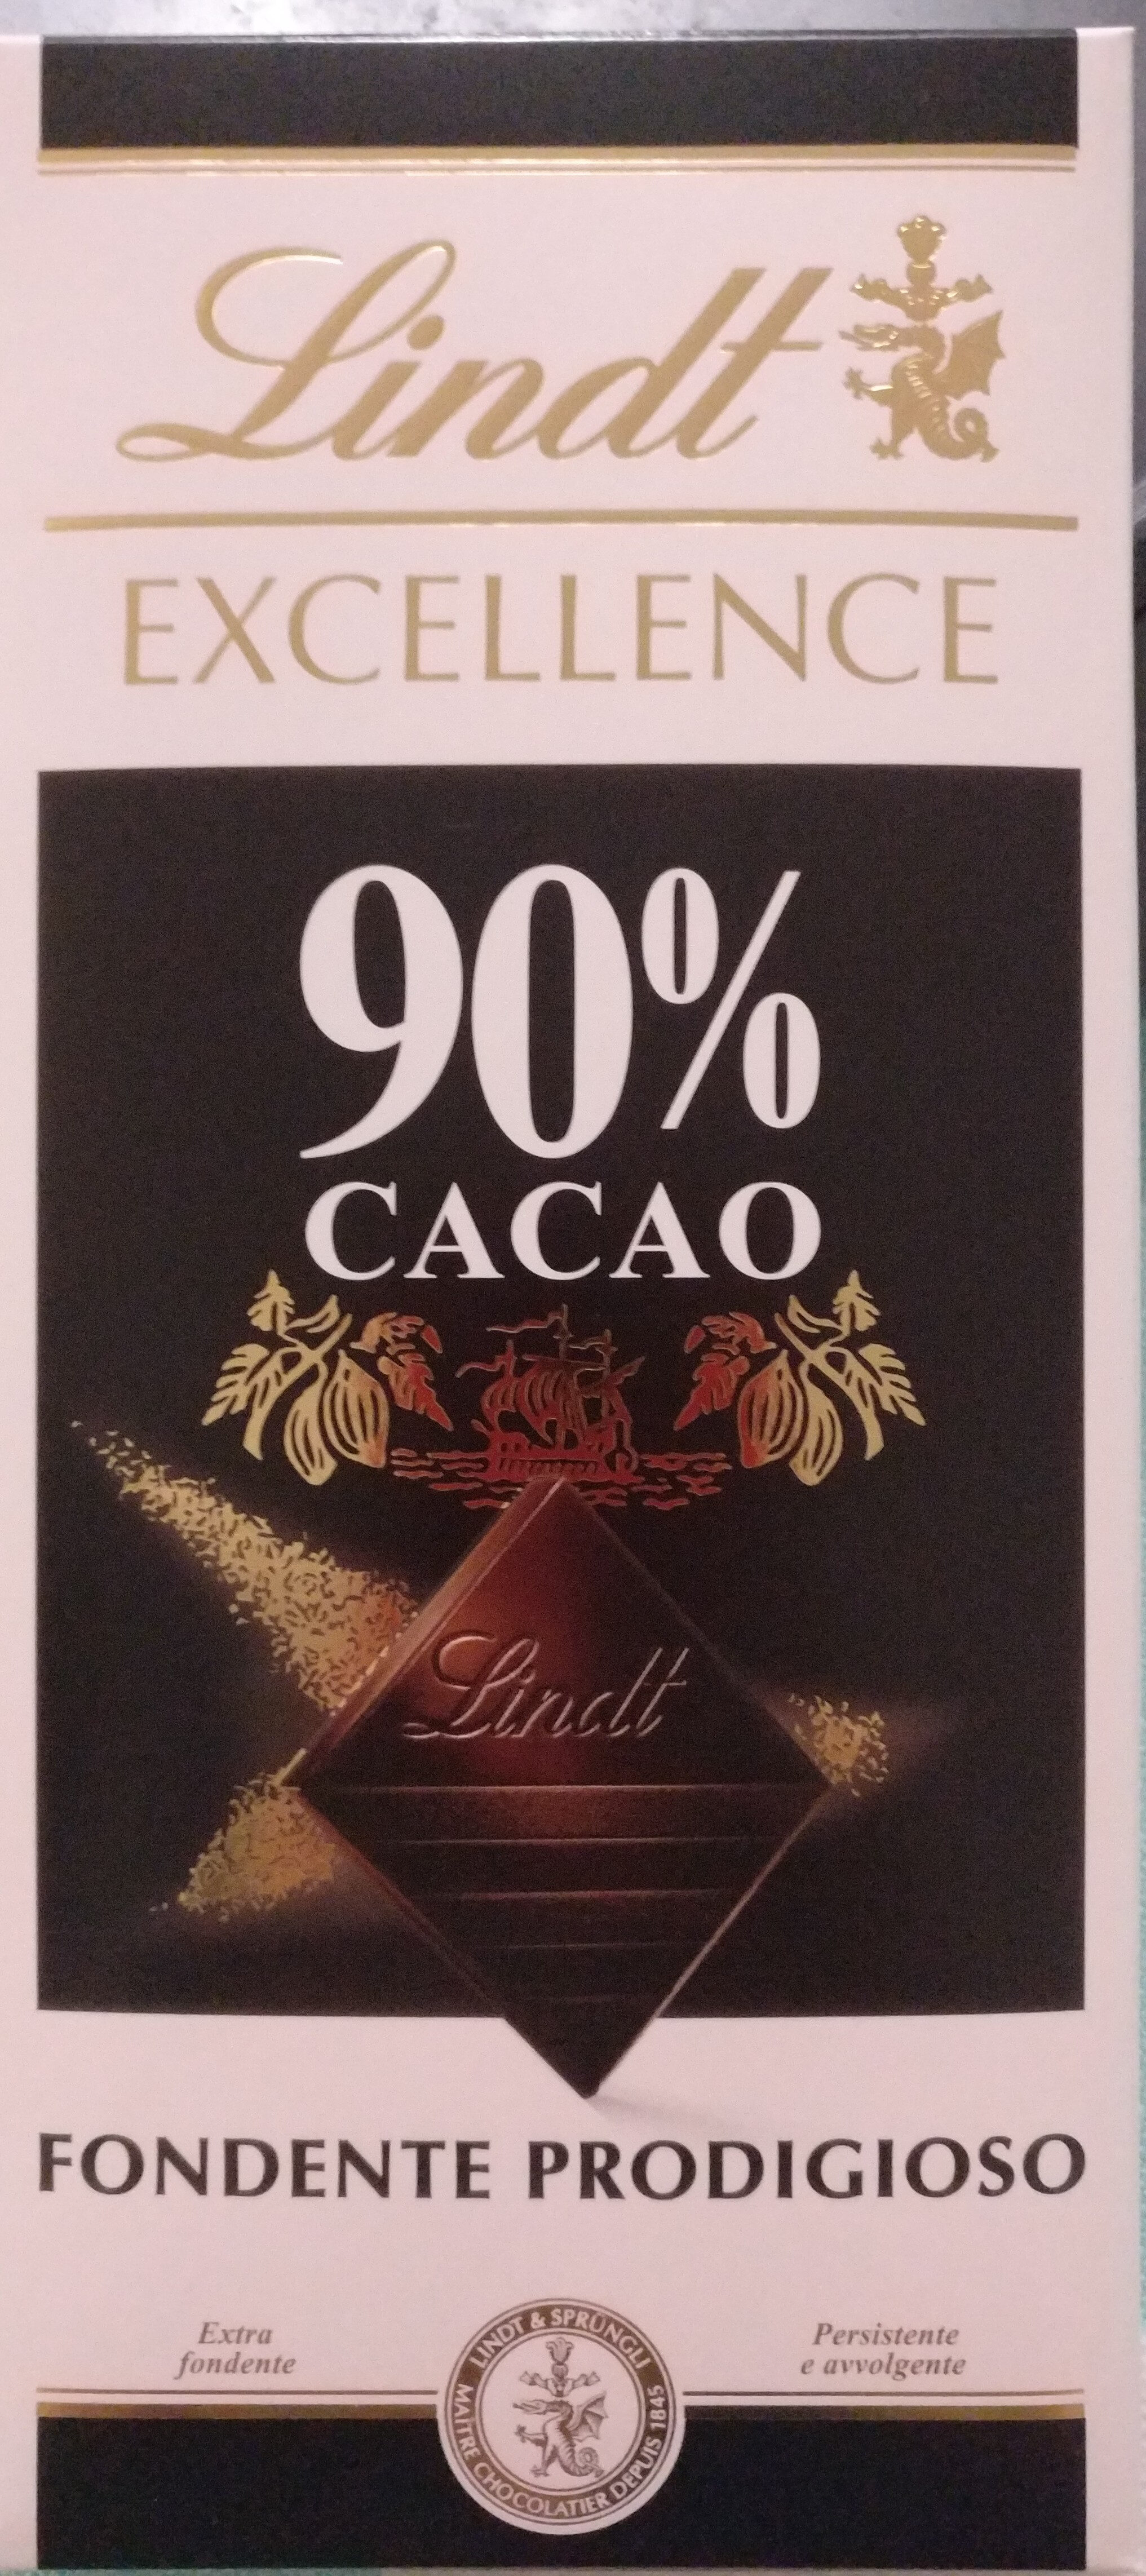 Fondente prodigioso 90% cacao - Produkt - it